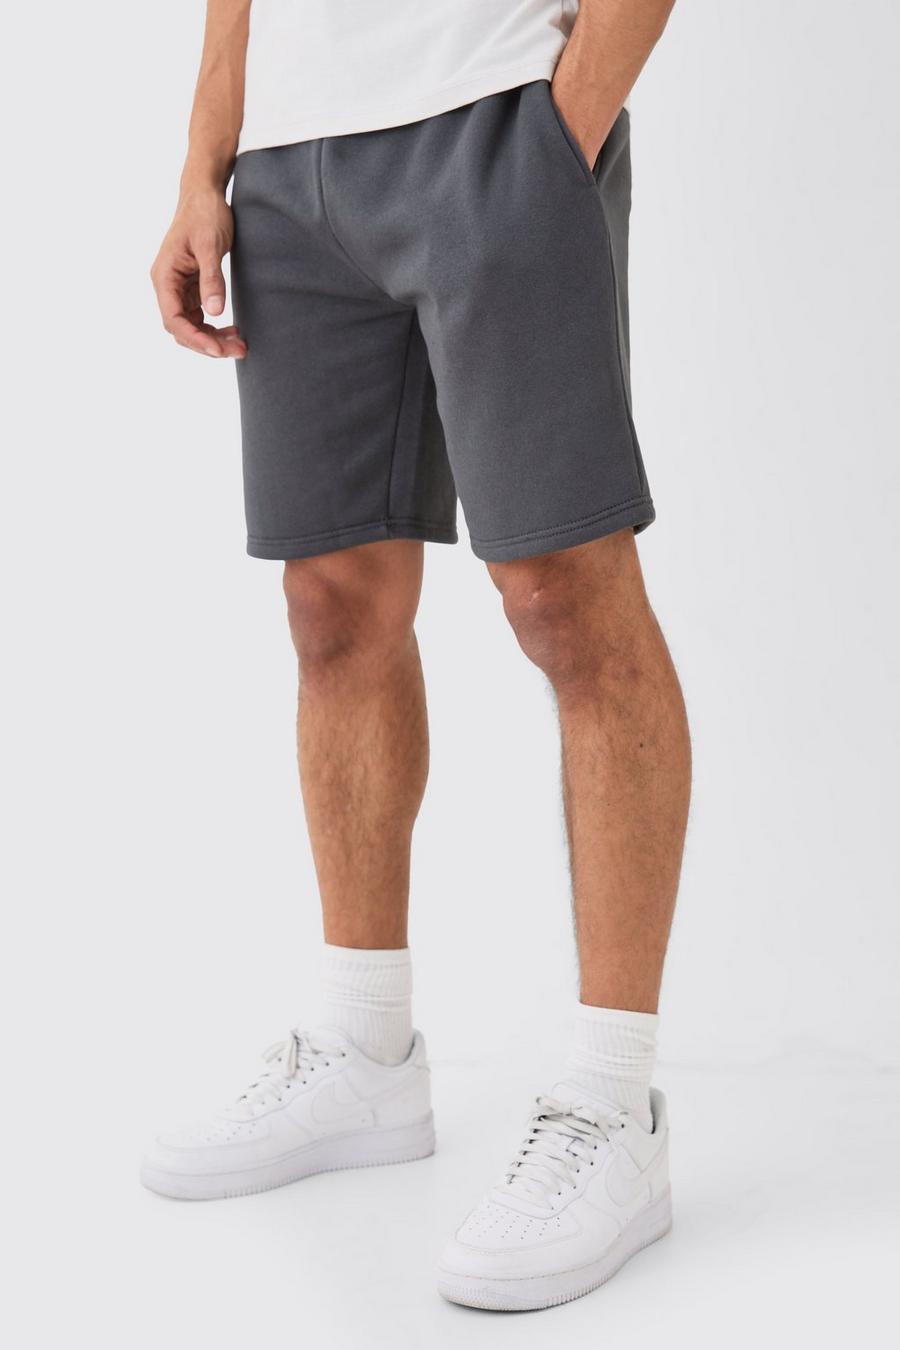 Lockere mittellange Basic Shorts, Charcoal